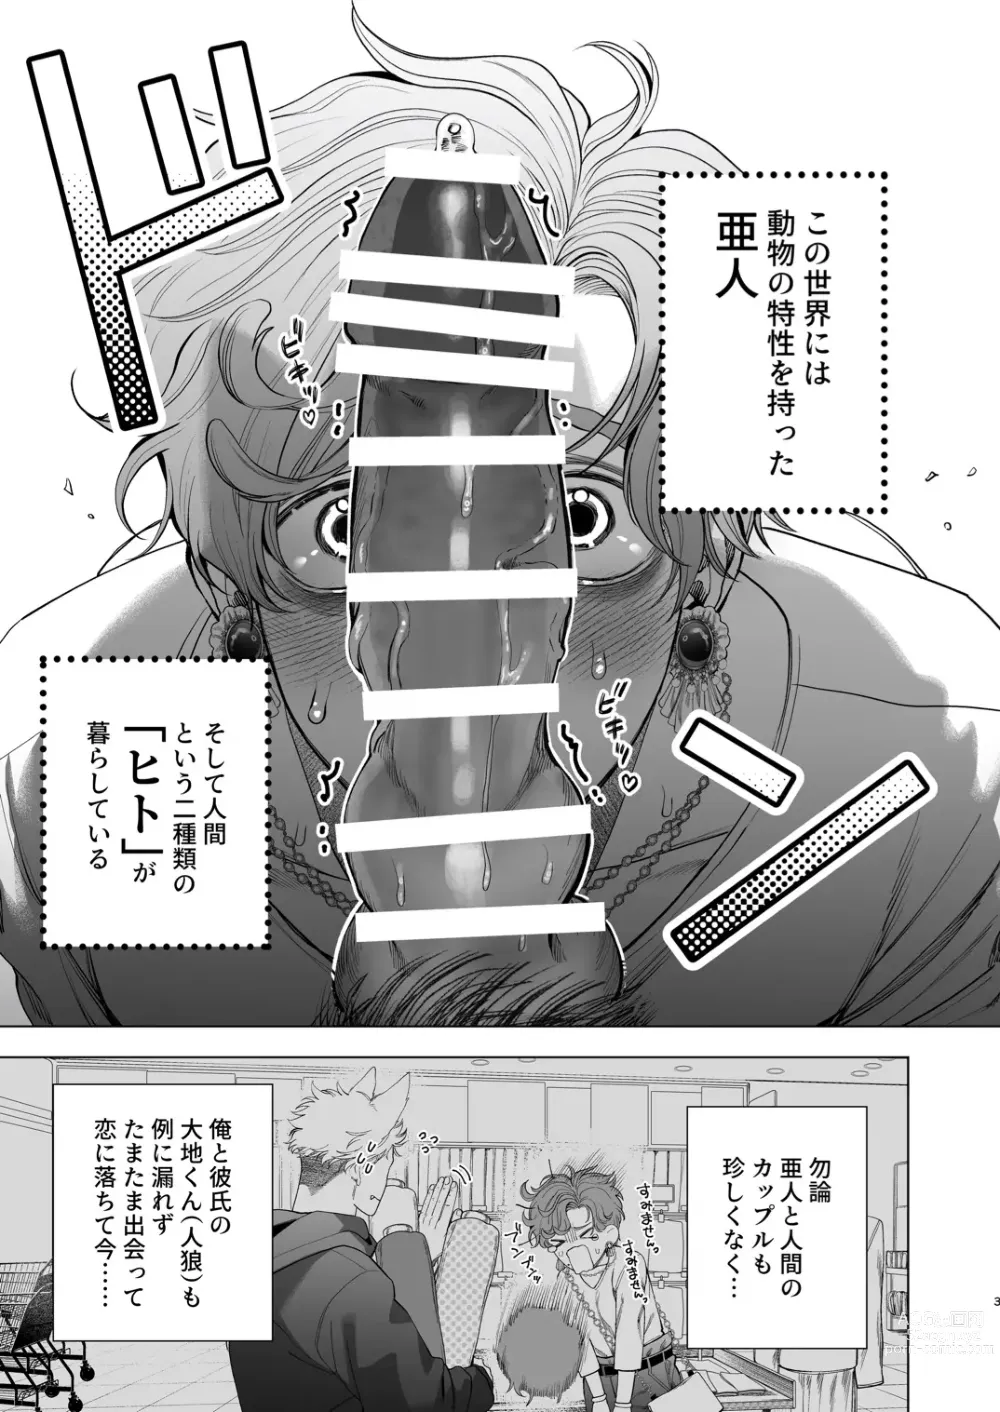 Page 2 of doujinshi Ookami Kareshi no Mofurikata